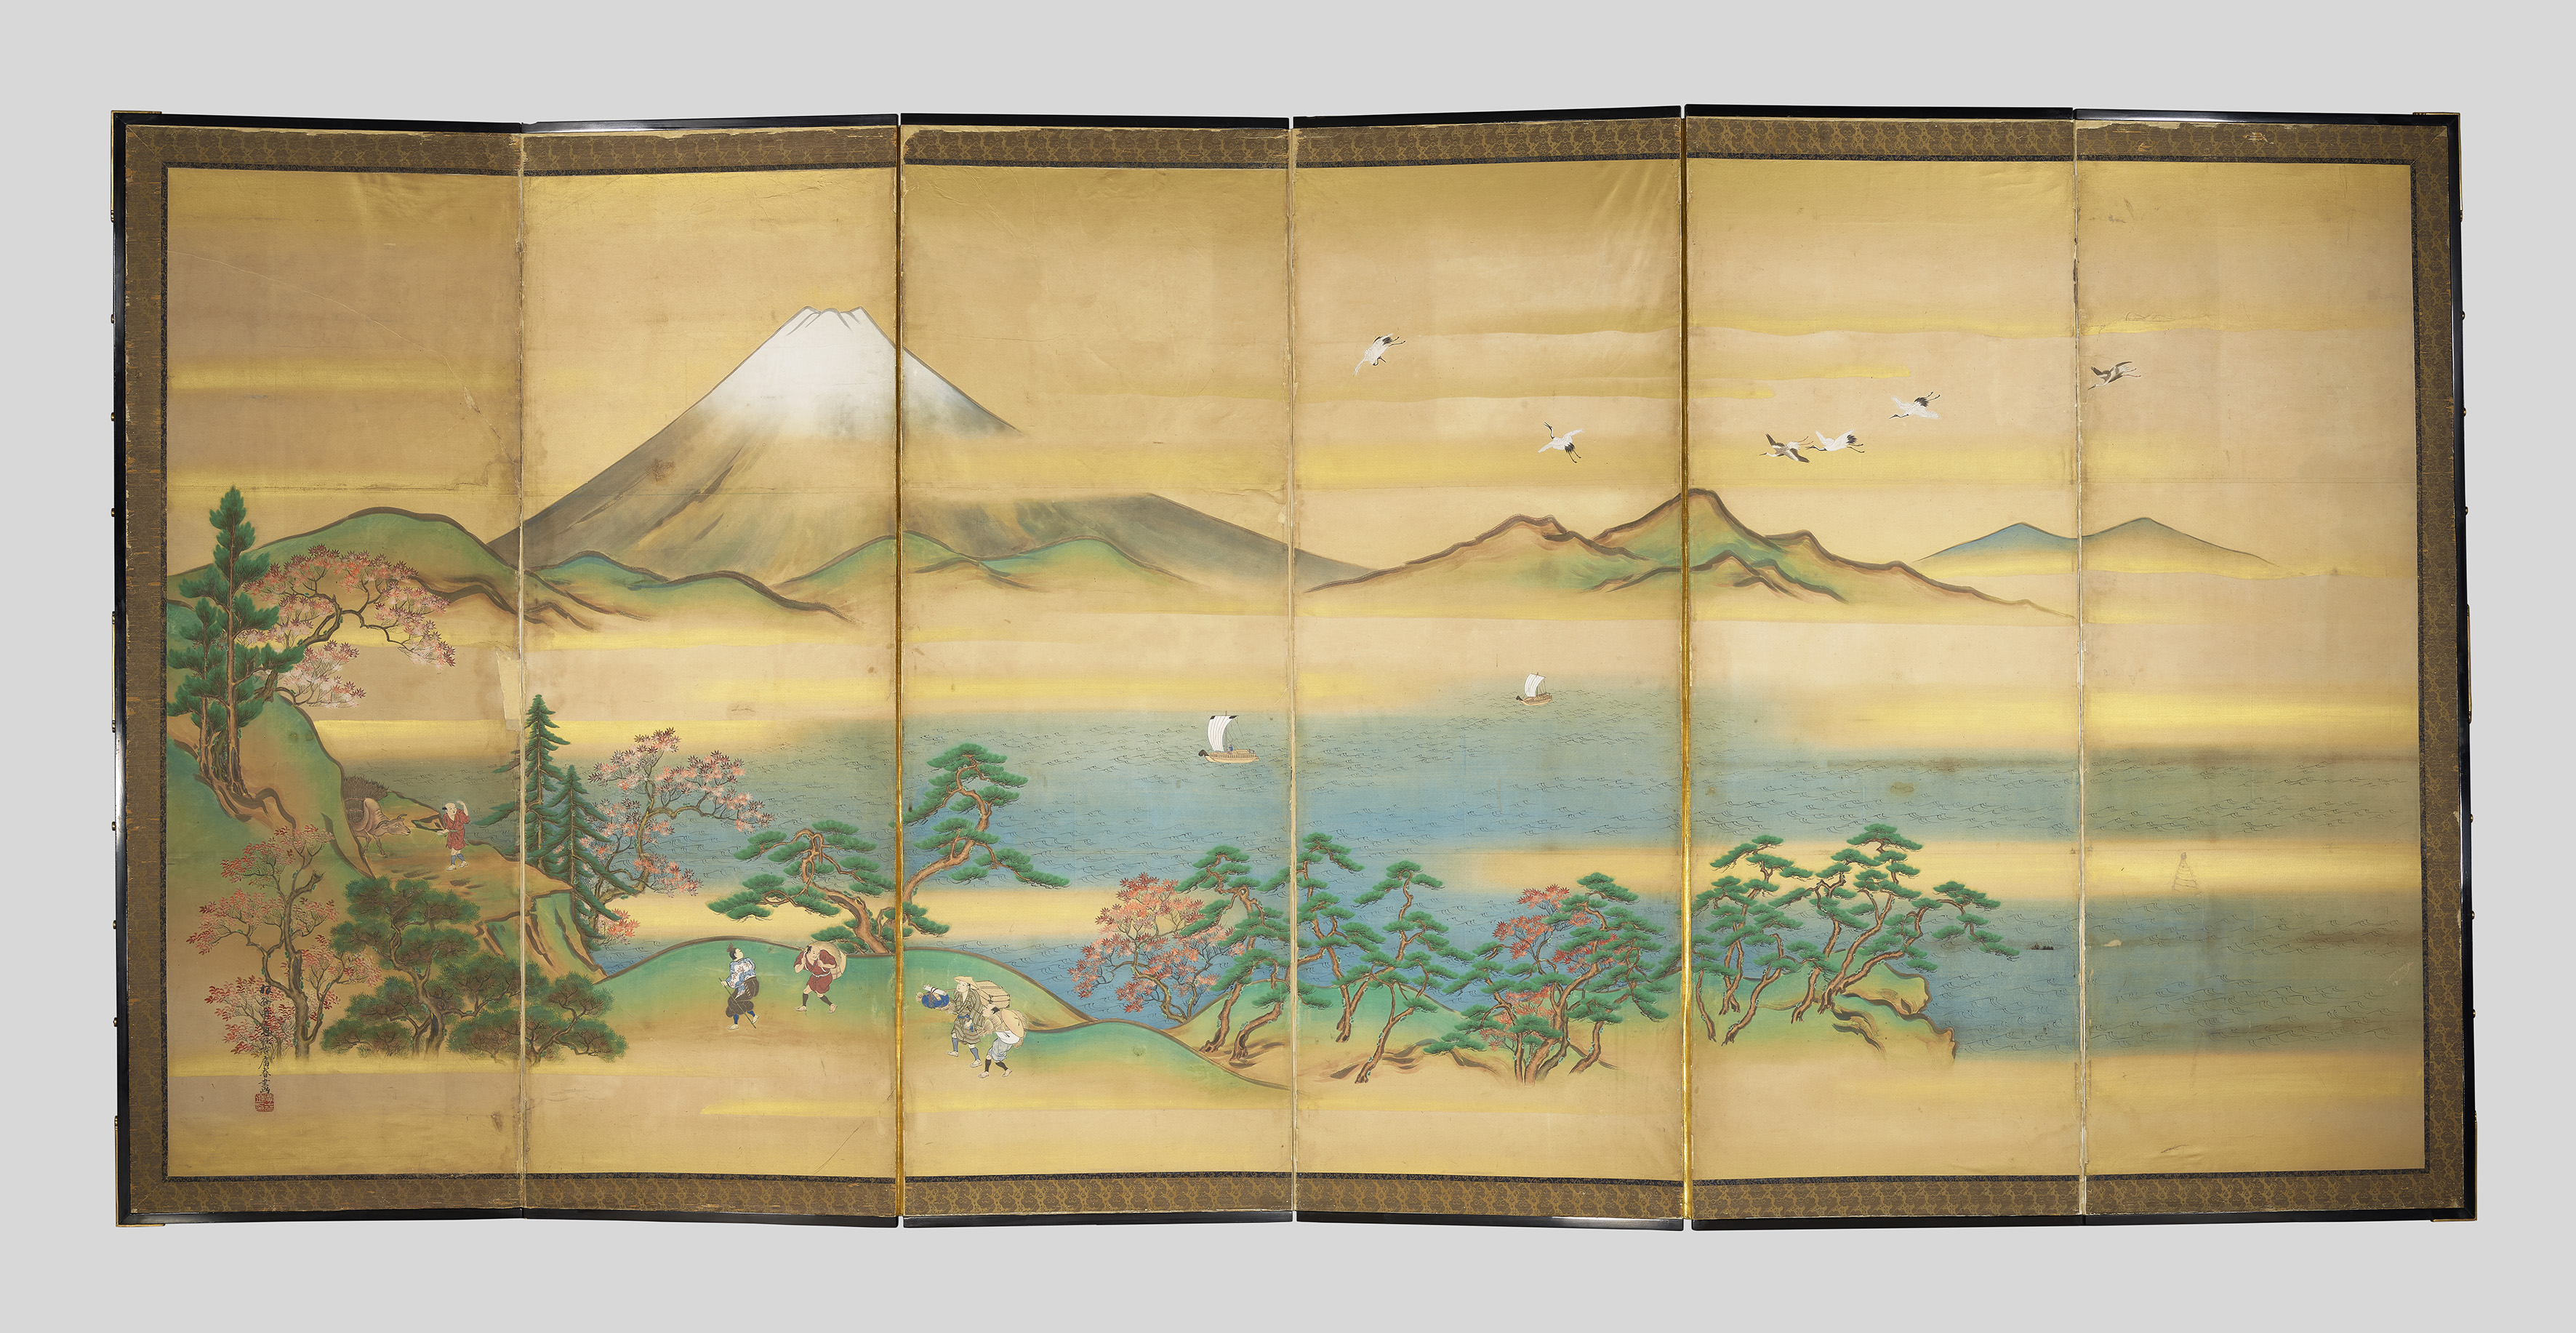 The screen depicting Mount Fuji 